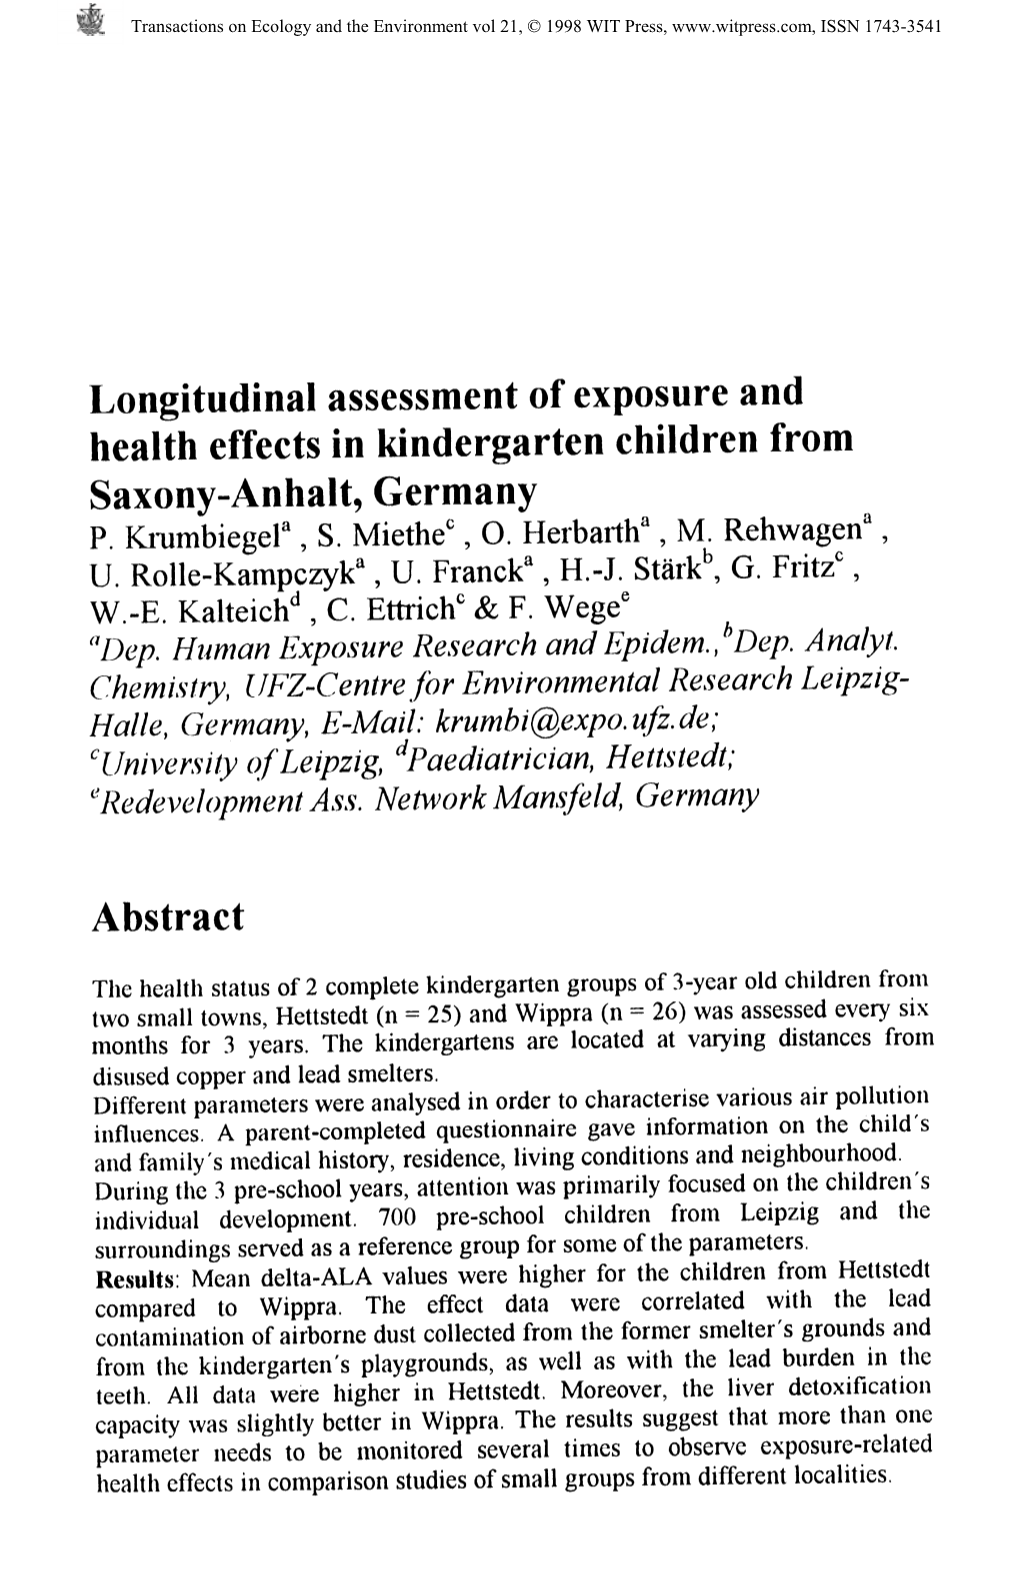 Longitudinal Assessment of Exposure and Health Effects in Kindergarten Children From